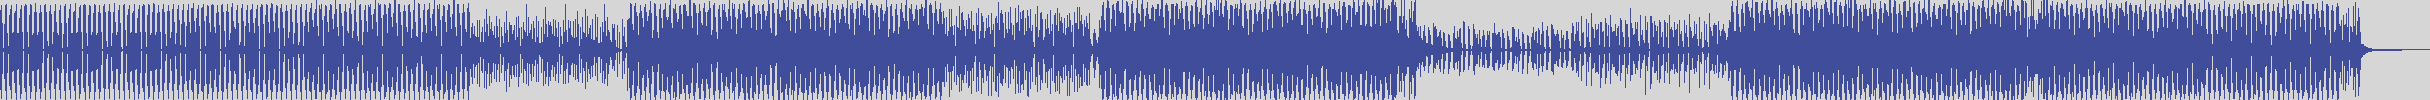 atomic_recordings [AR008] Jeff Jackson - This Feeling [Original Mix] audio wave form